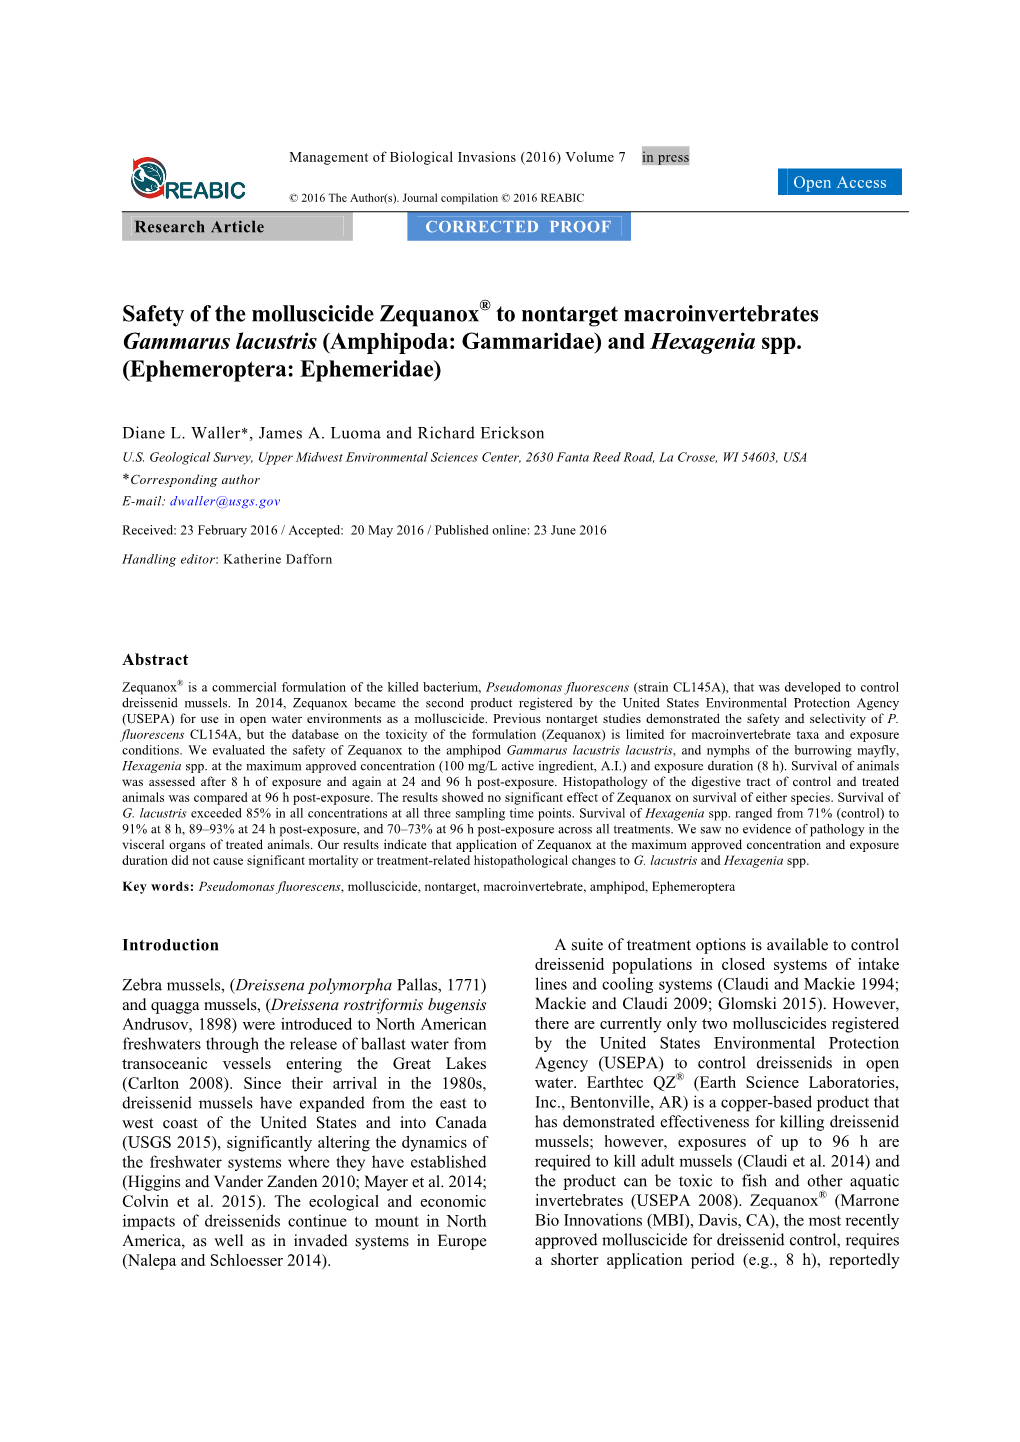 Safety of the Molluscicide Zequanox® to Nontarget Macroinvertebrates Gammarus Lacustris (Amphipoda: Gammaridae) and Hexagenia Spp